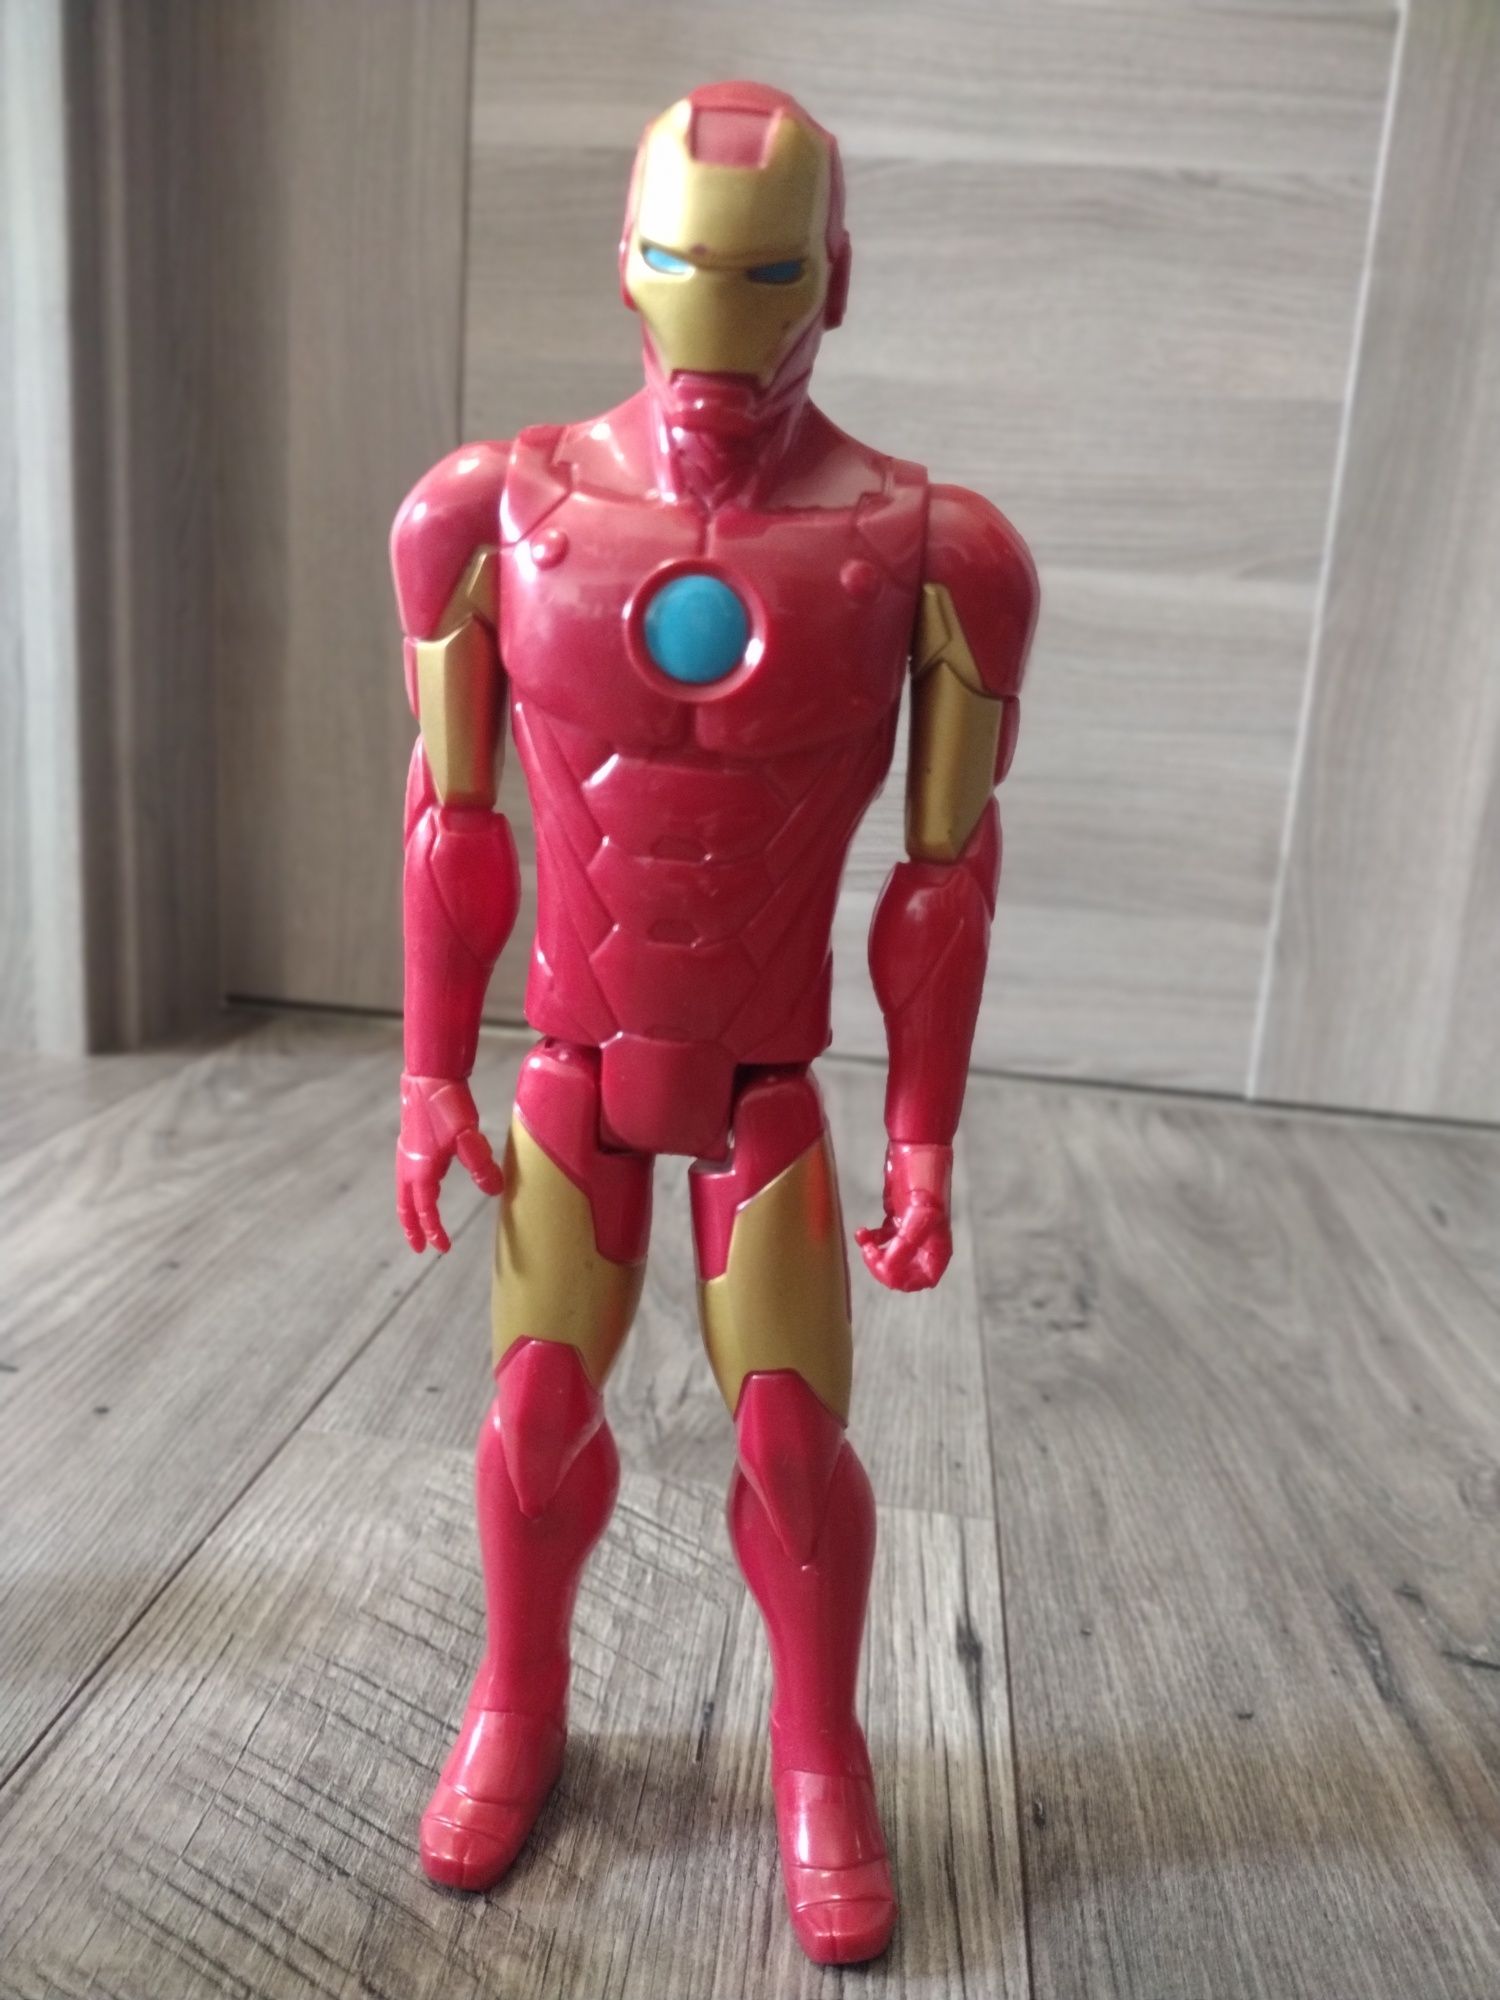 Figurka Iron Man z serii Marvel